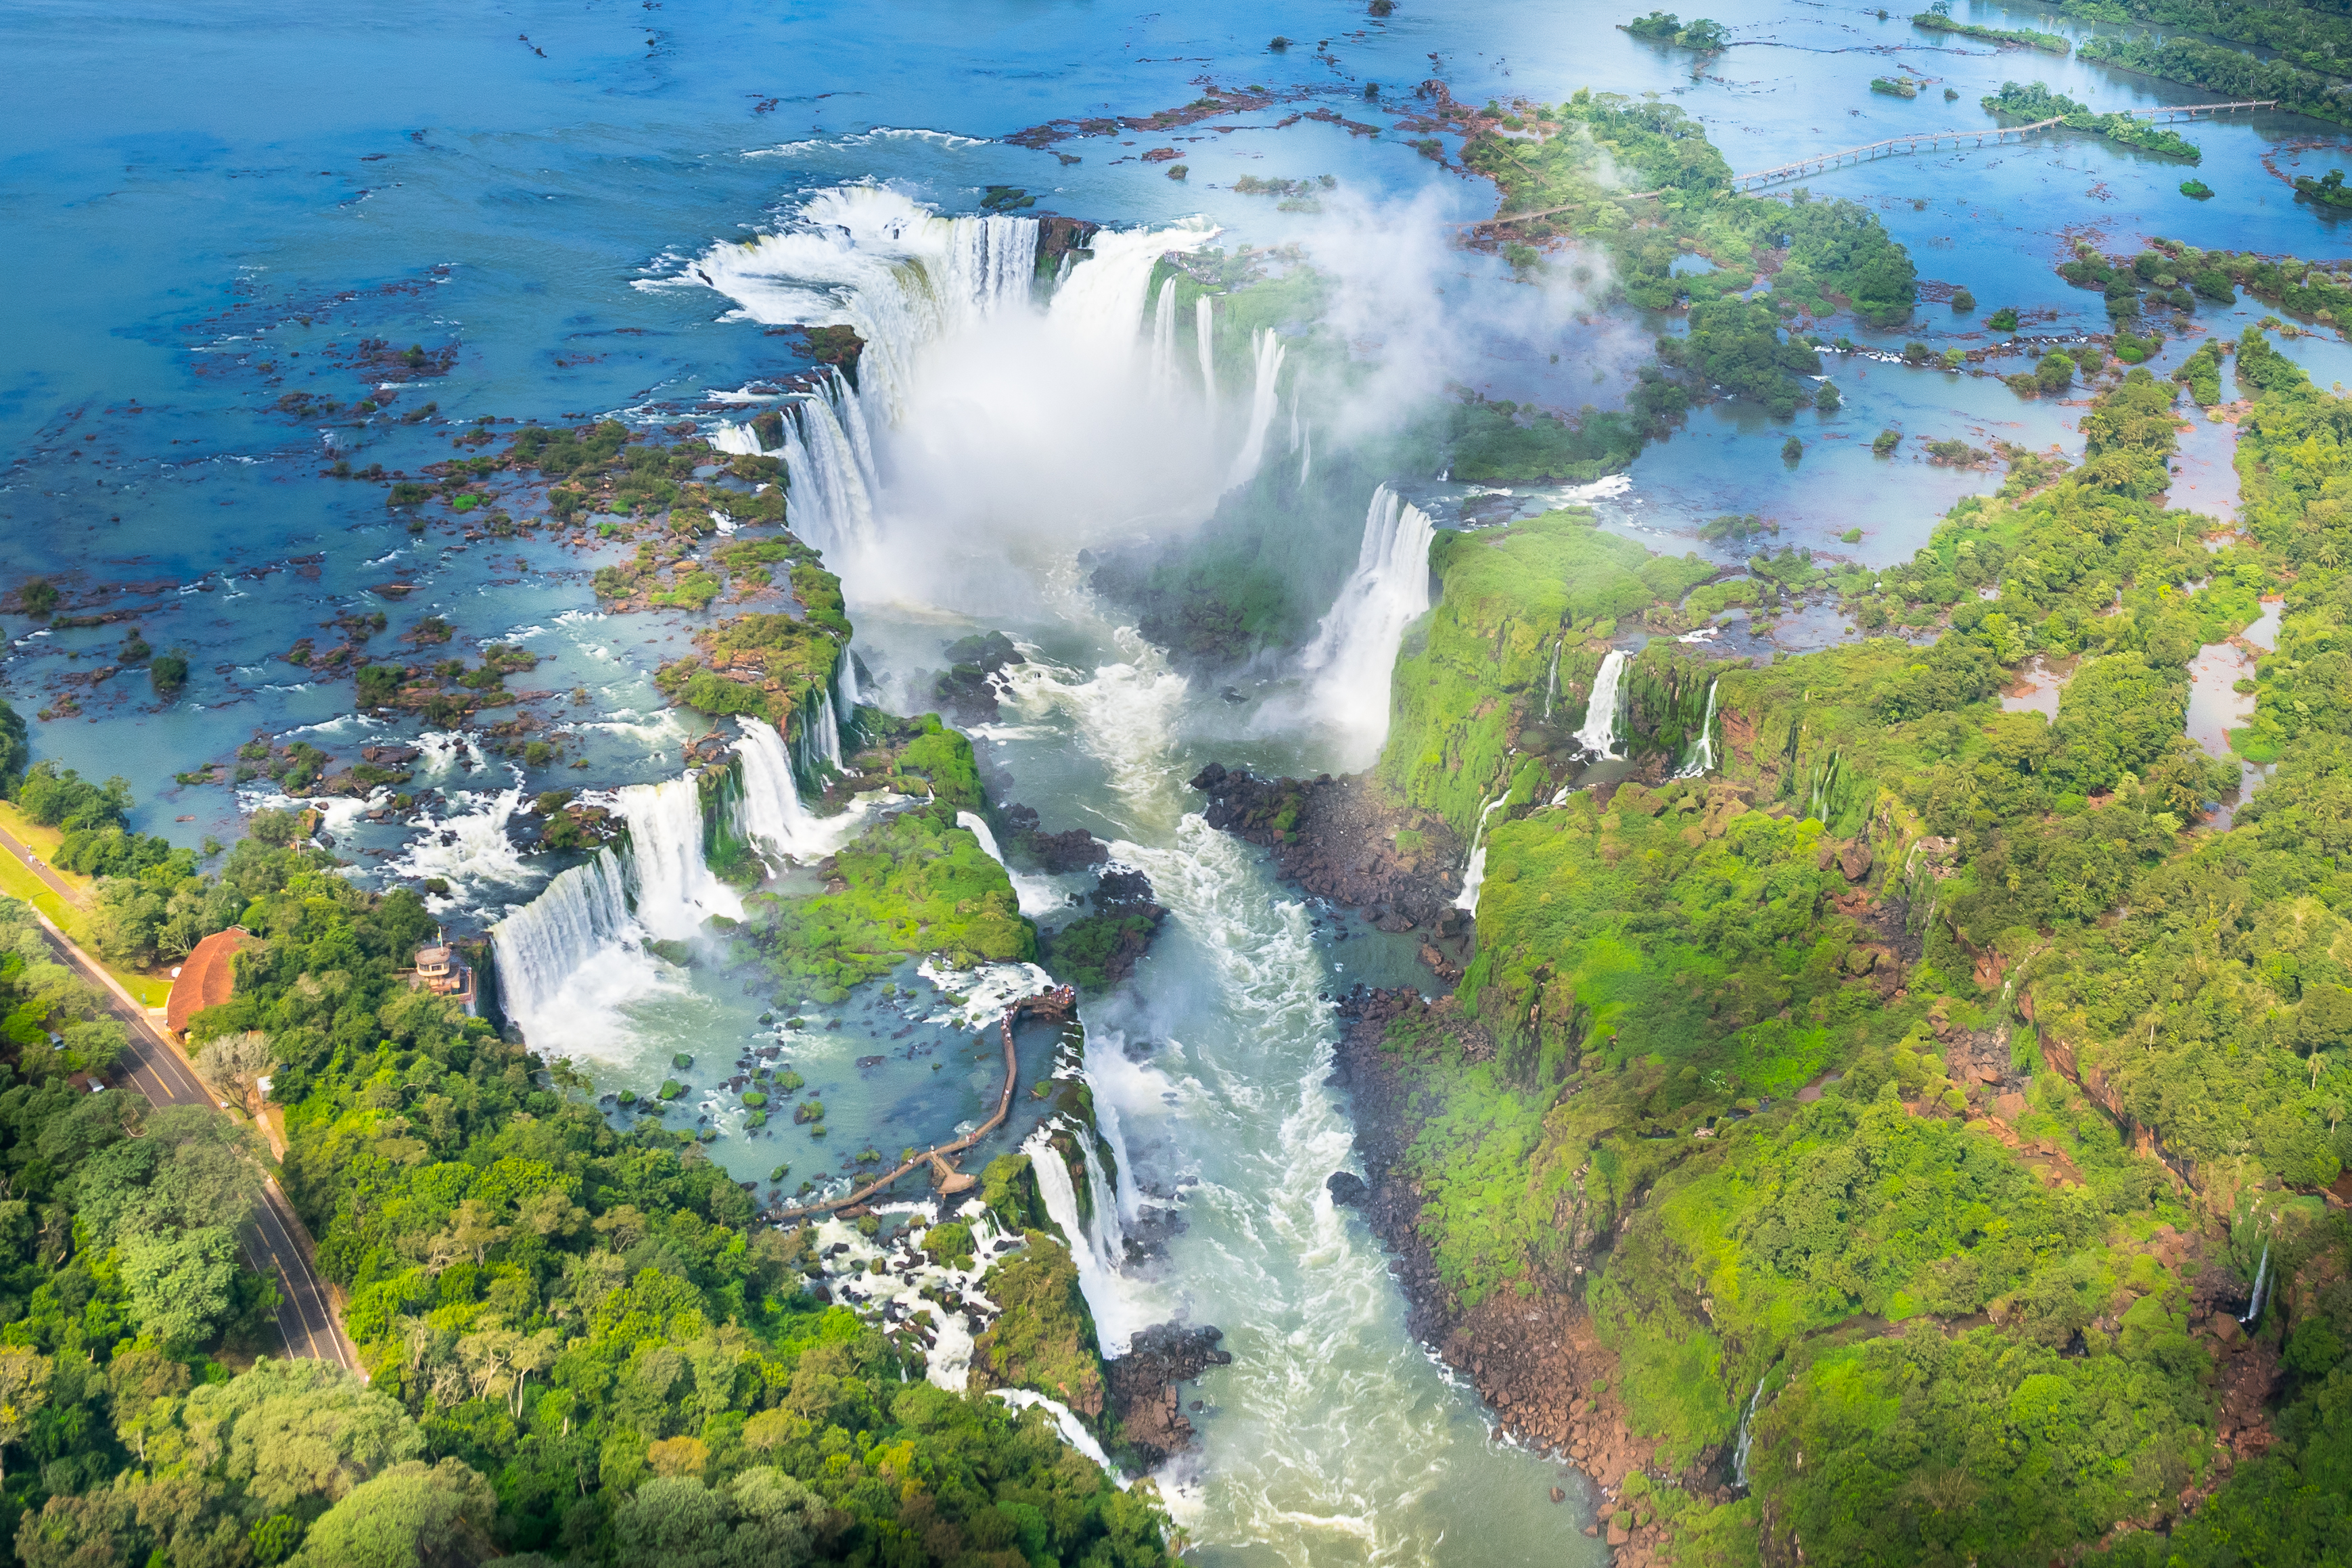 Комплекс водопадов на границе бразилии аргентины. Водопады Игуасу Аргентина. Бразилия водопады Игуасу. Водопады Фоз де Игуасу. Национальный парк Игуасу, Бразилия / Аргентина.